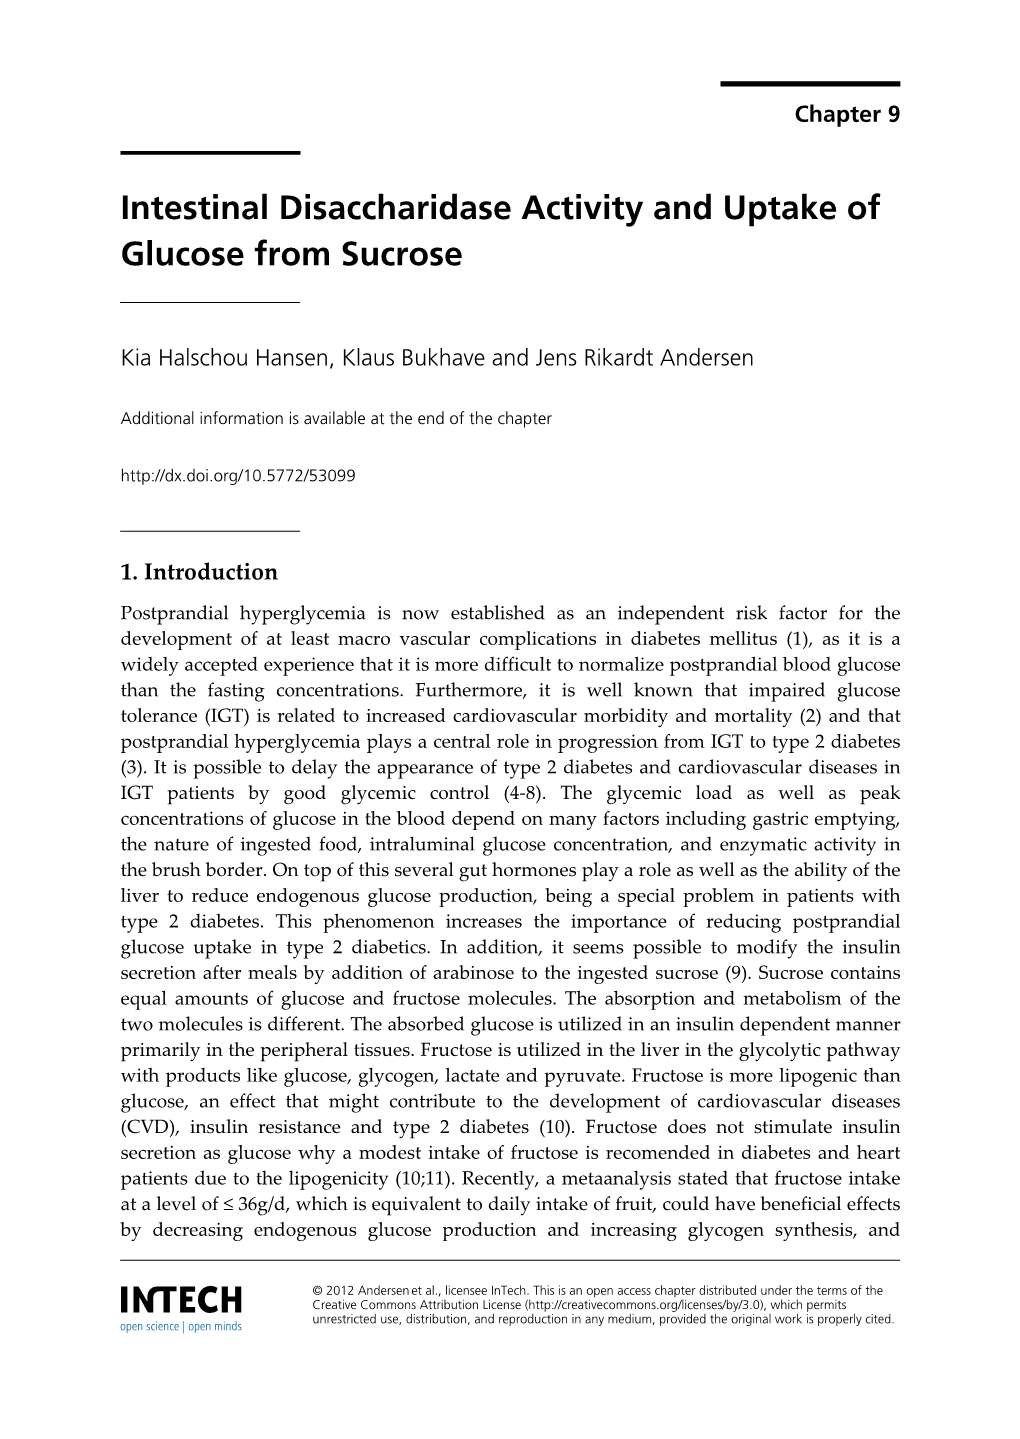 Intestinal Disaccharidase Activity and Uptake of Glucose from Sucrose